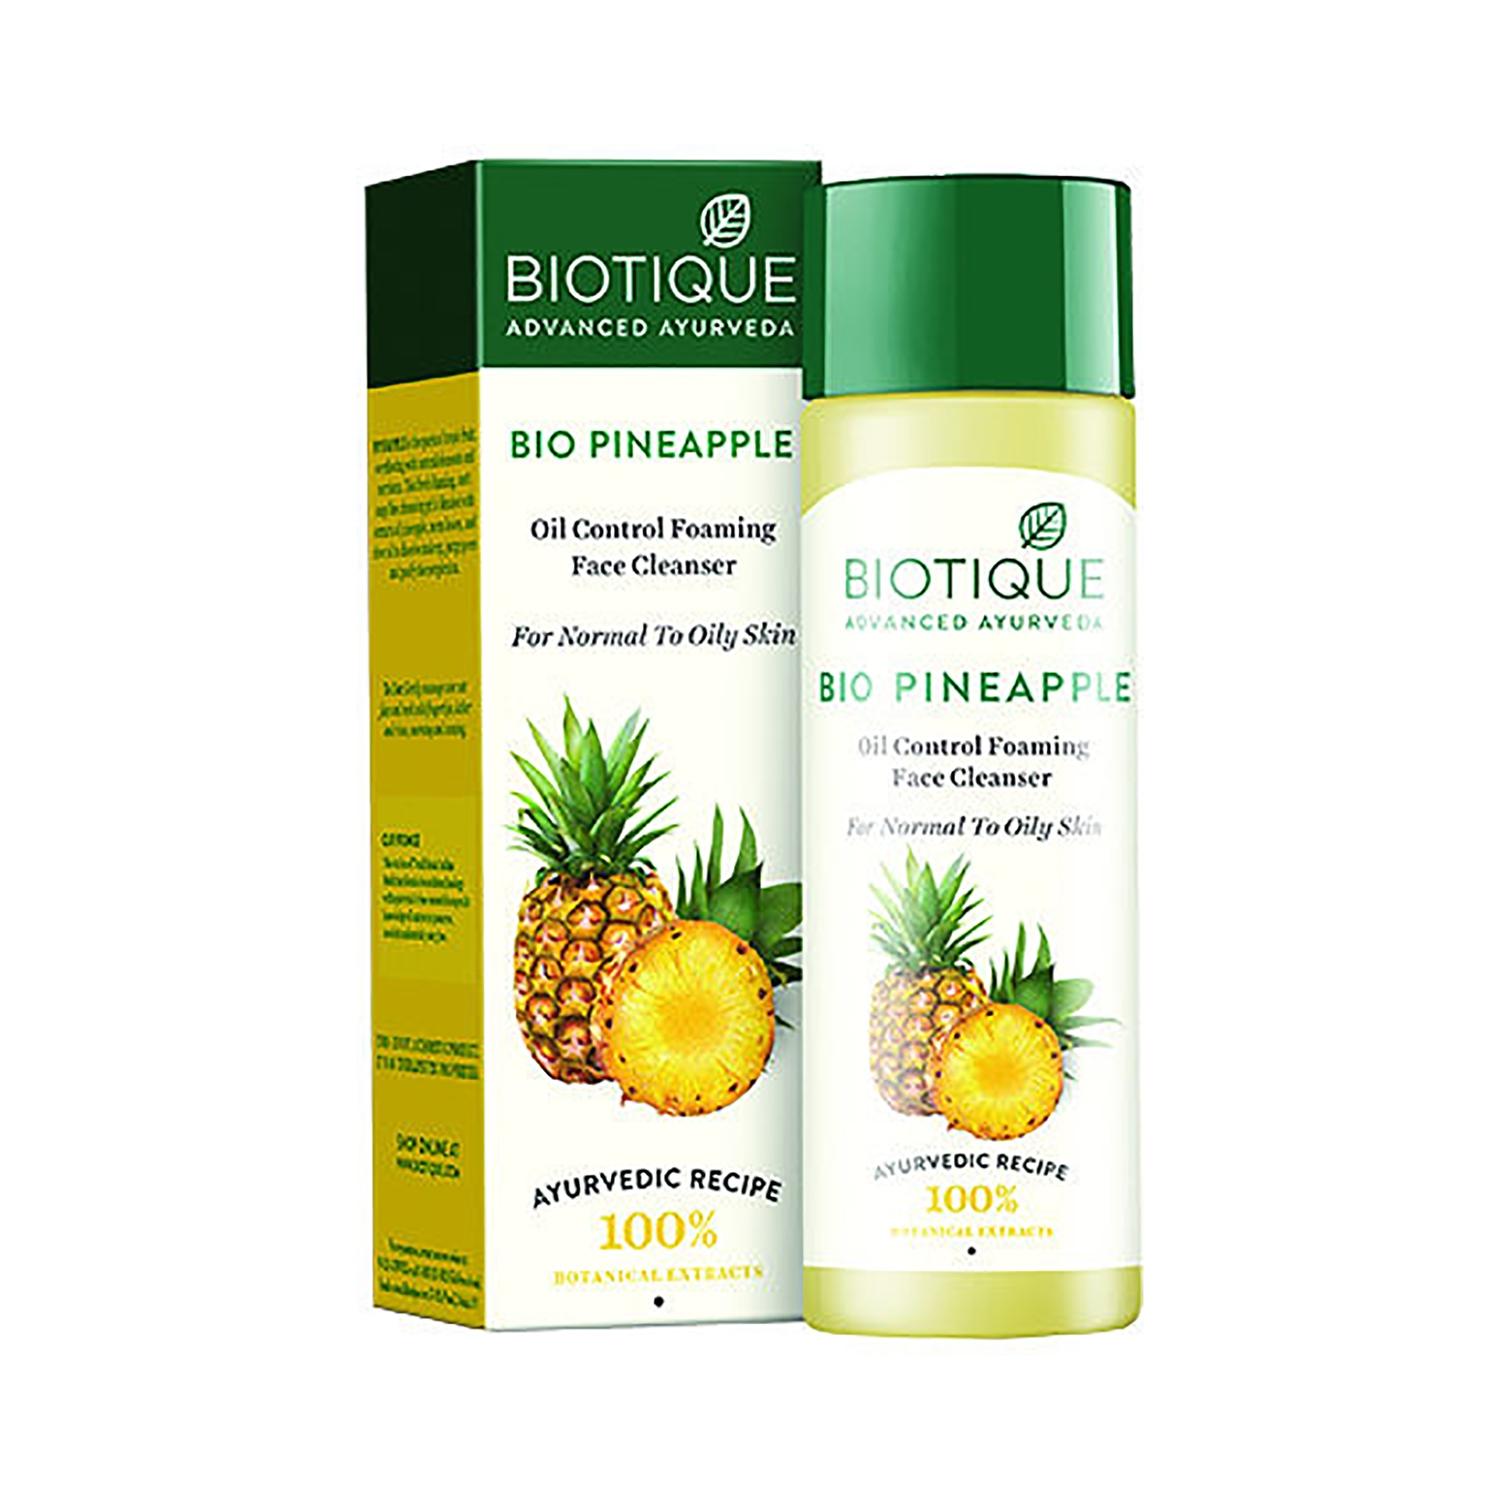 biotique bio pineapple oil control foaming face cleanser (200ml)